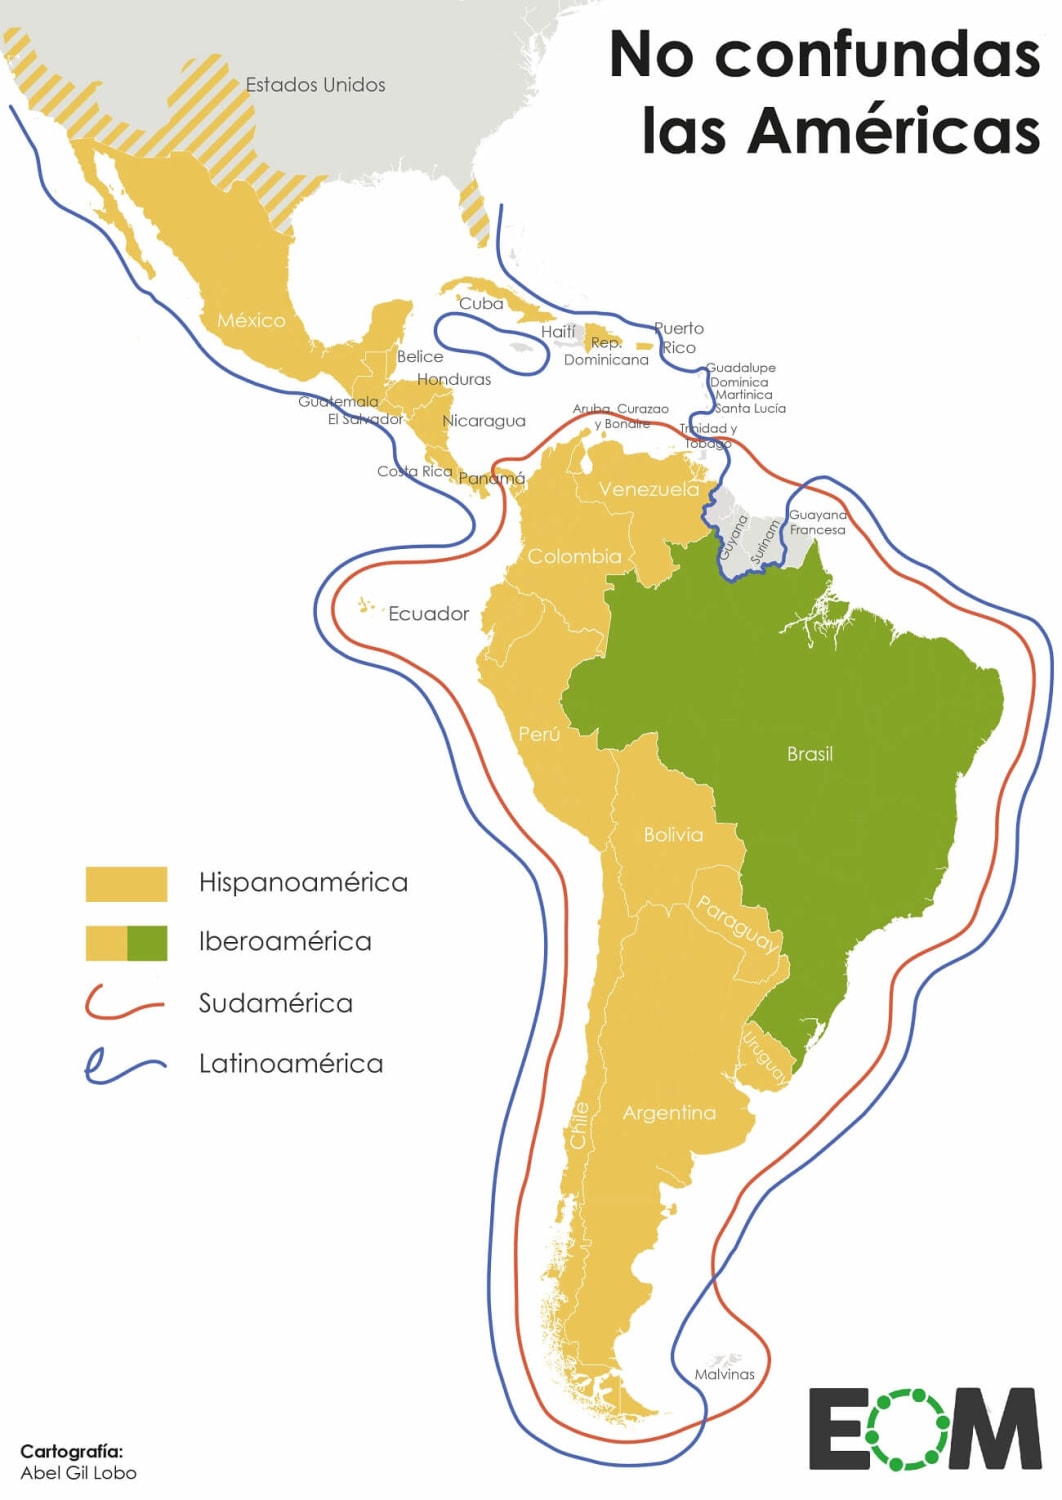 Venn diagram-style map attempting to define Latin America